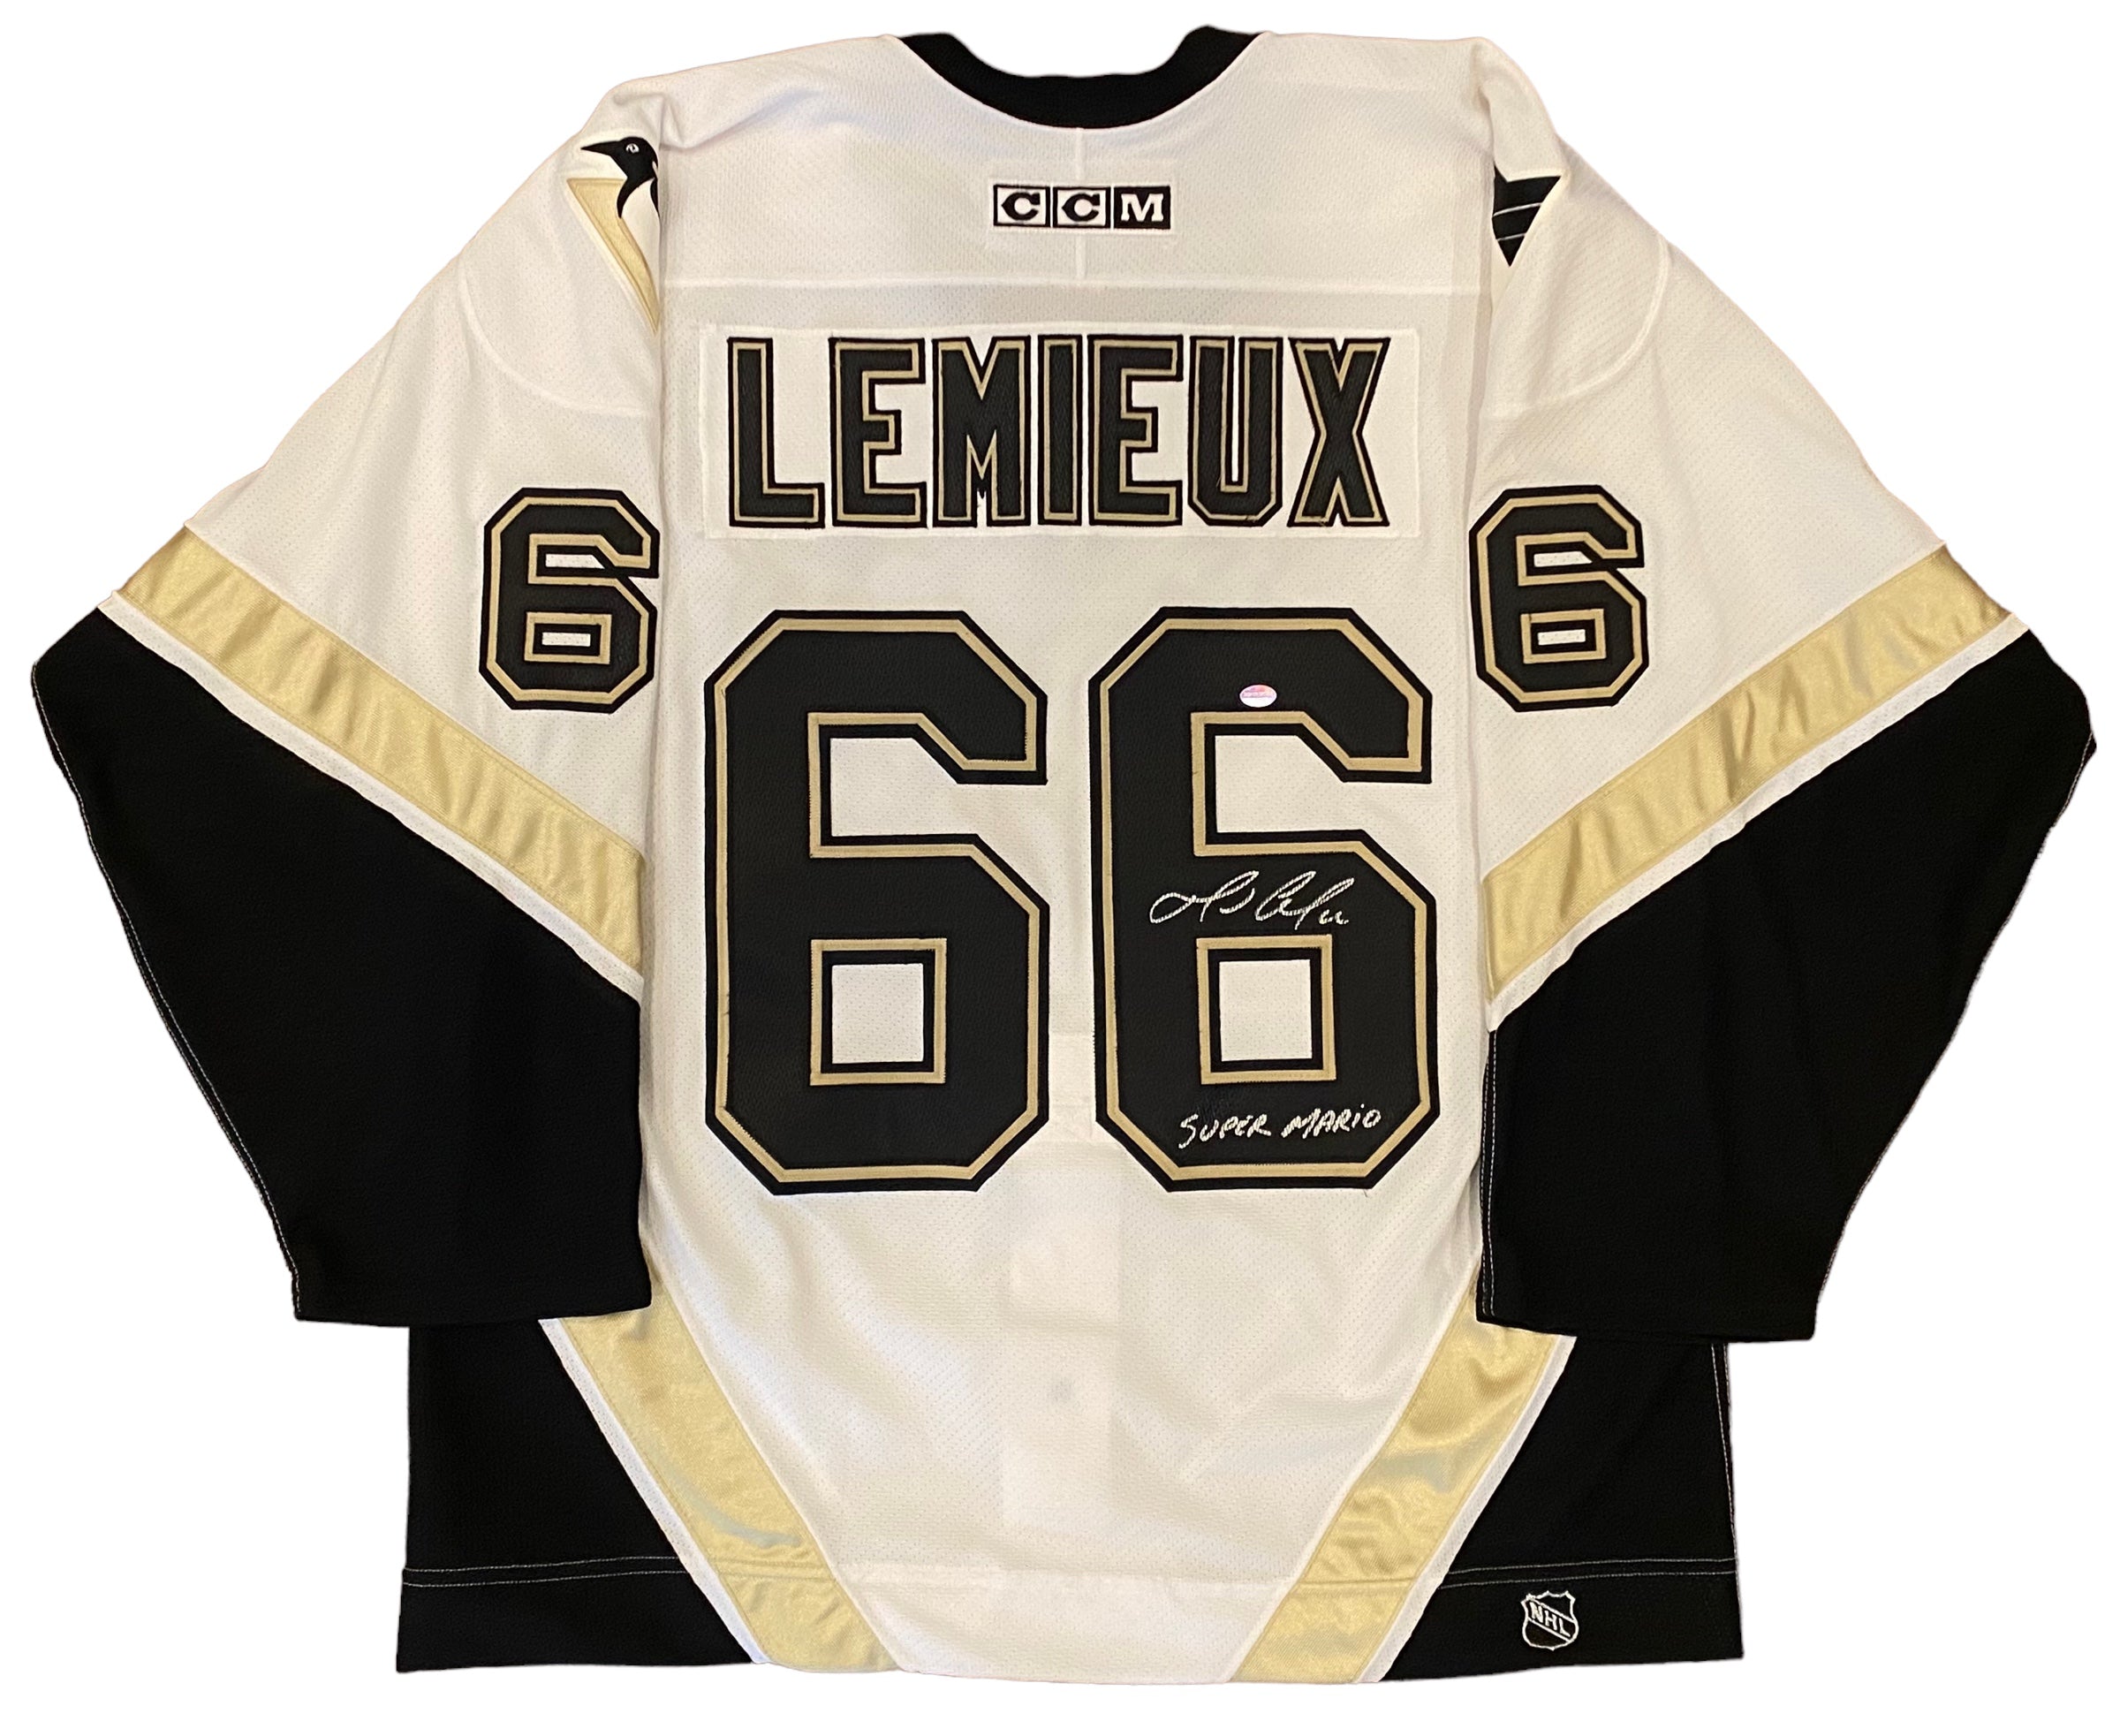 Signed Authentic Mario Lemieux Pittsburgh Penguins Ultrafil Hockey Jersey  Sz 52